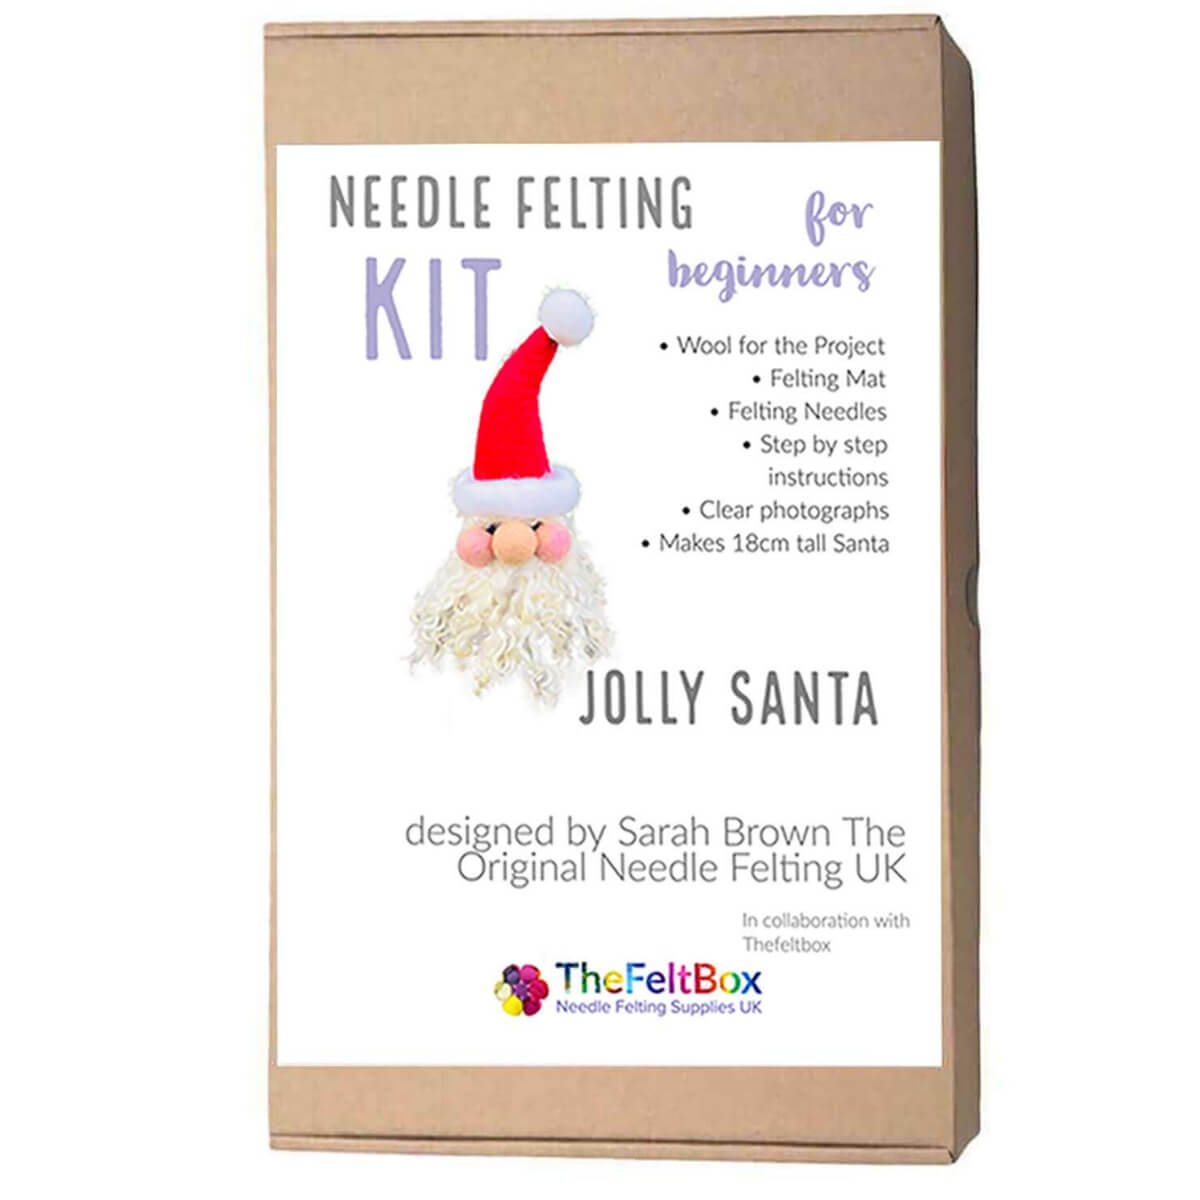 Needle Felting Santa Kit Beginners - Jolly Santa by Sarah Brown